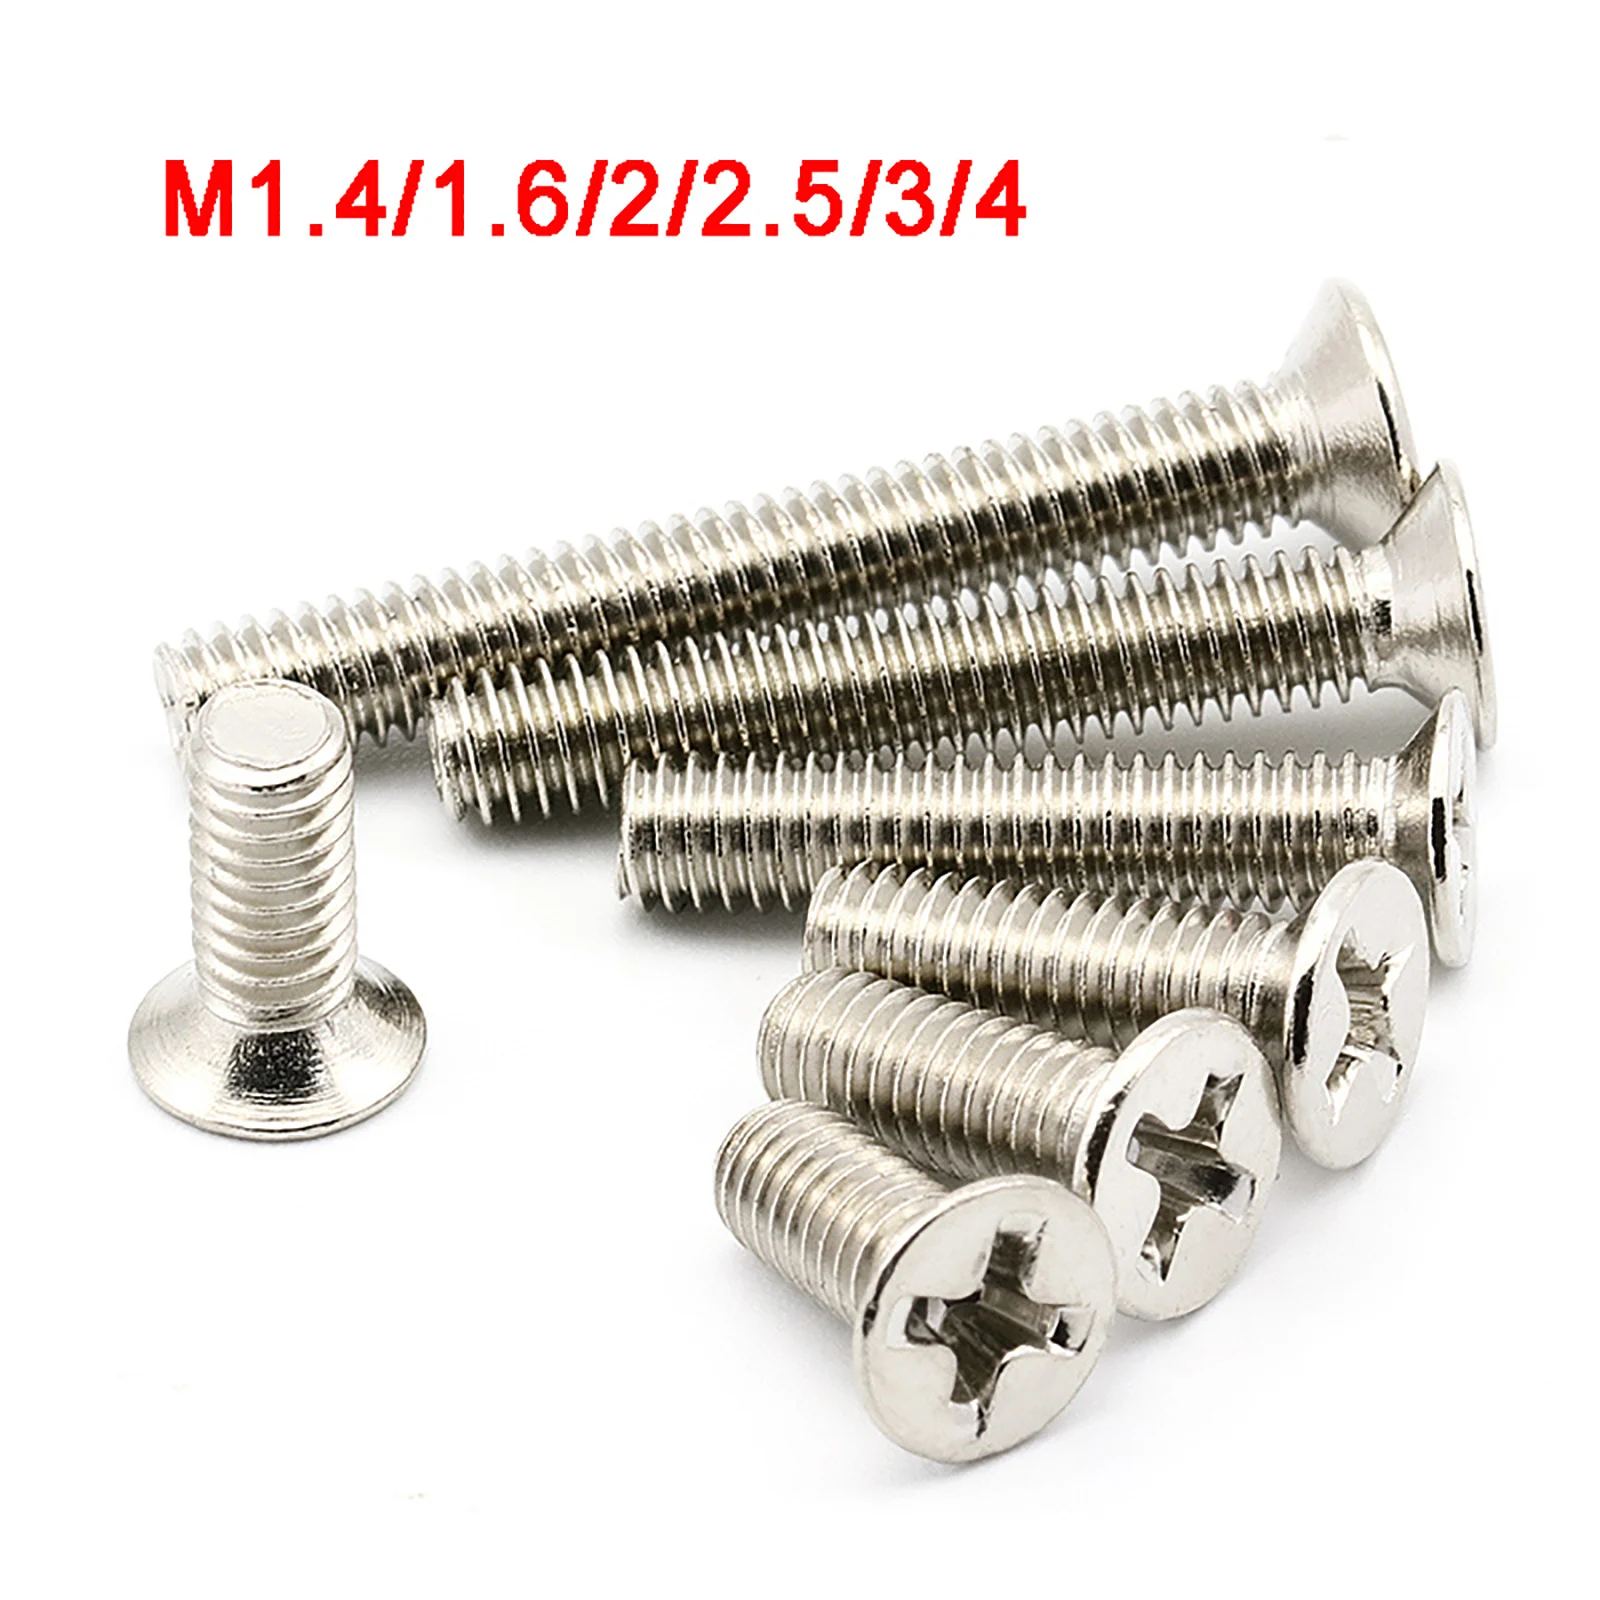 

M1.4-M4 Phillips Countersunk Machine Screws Flat Head Cross Bolts Nickel-plated Carbon Steel Length 3-20mm